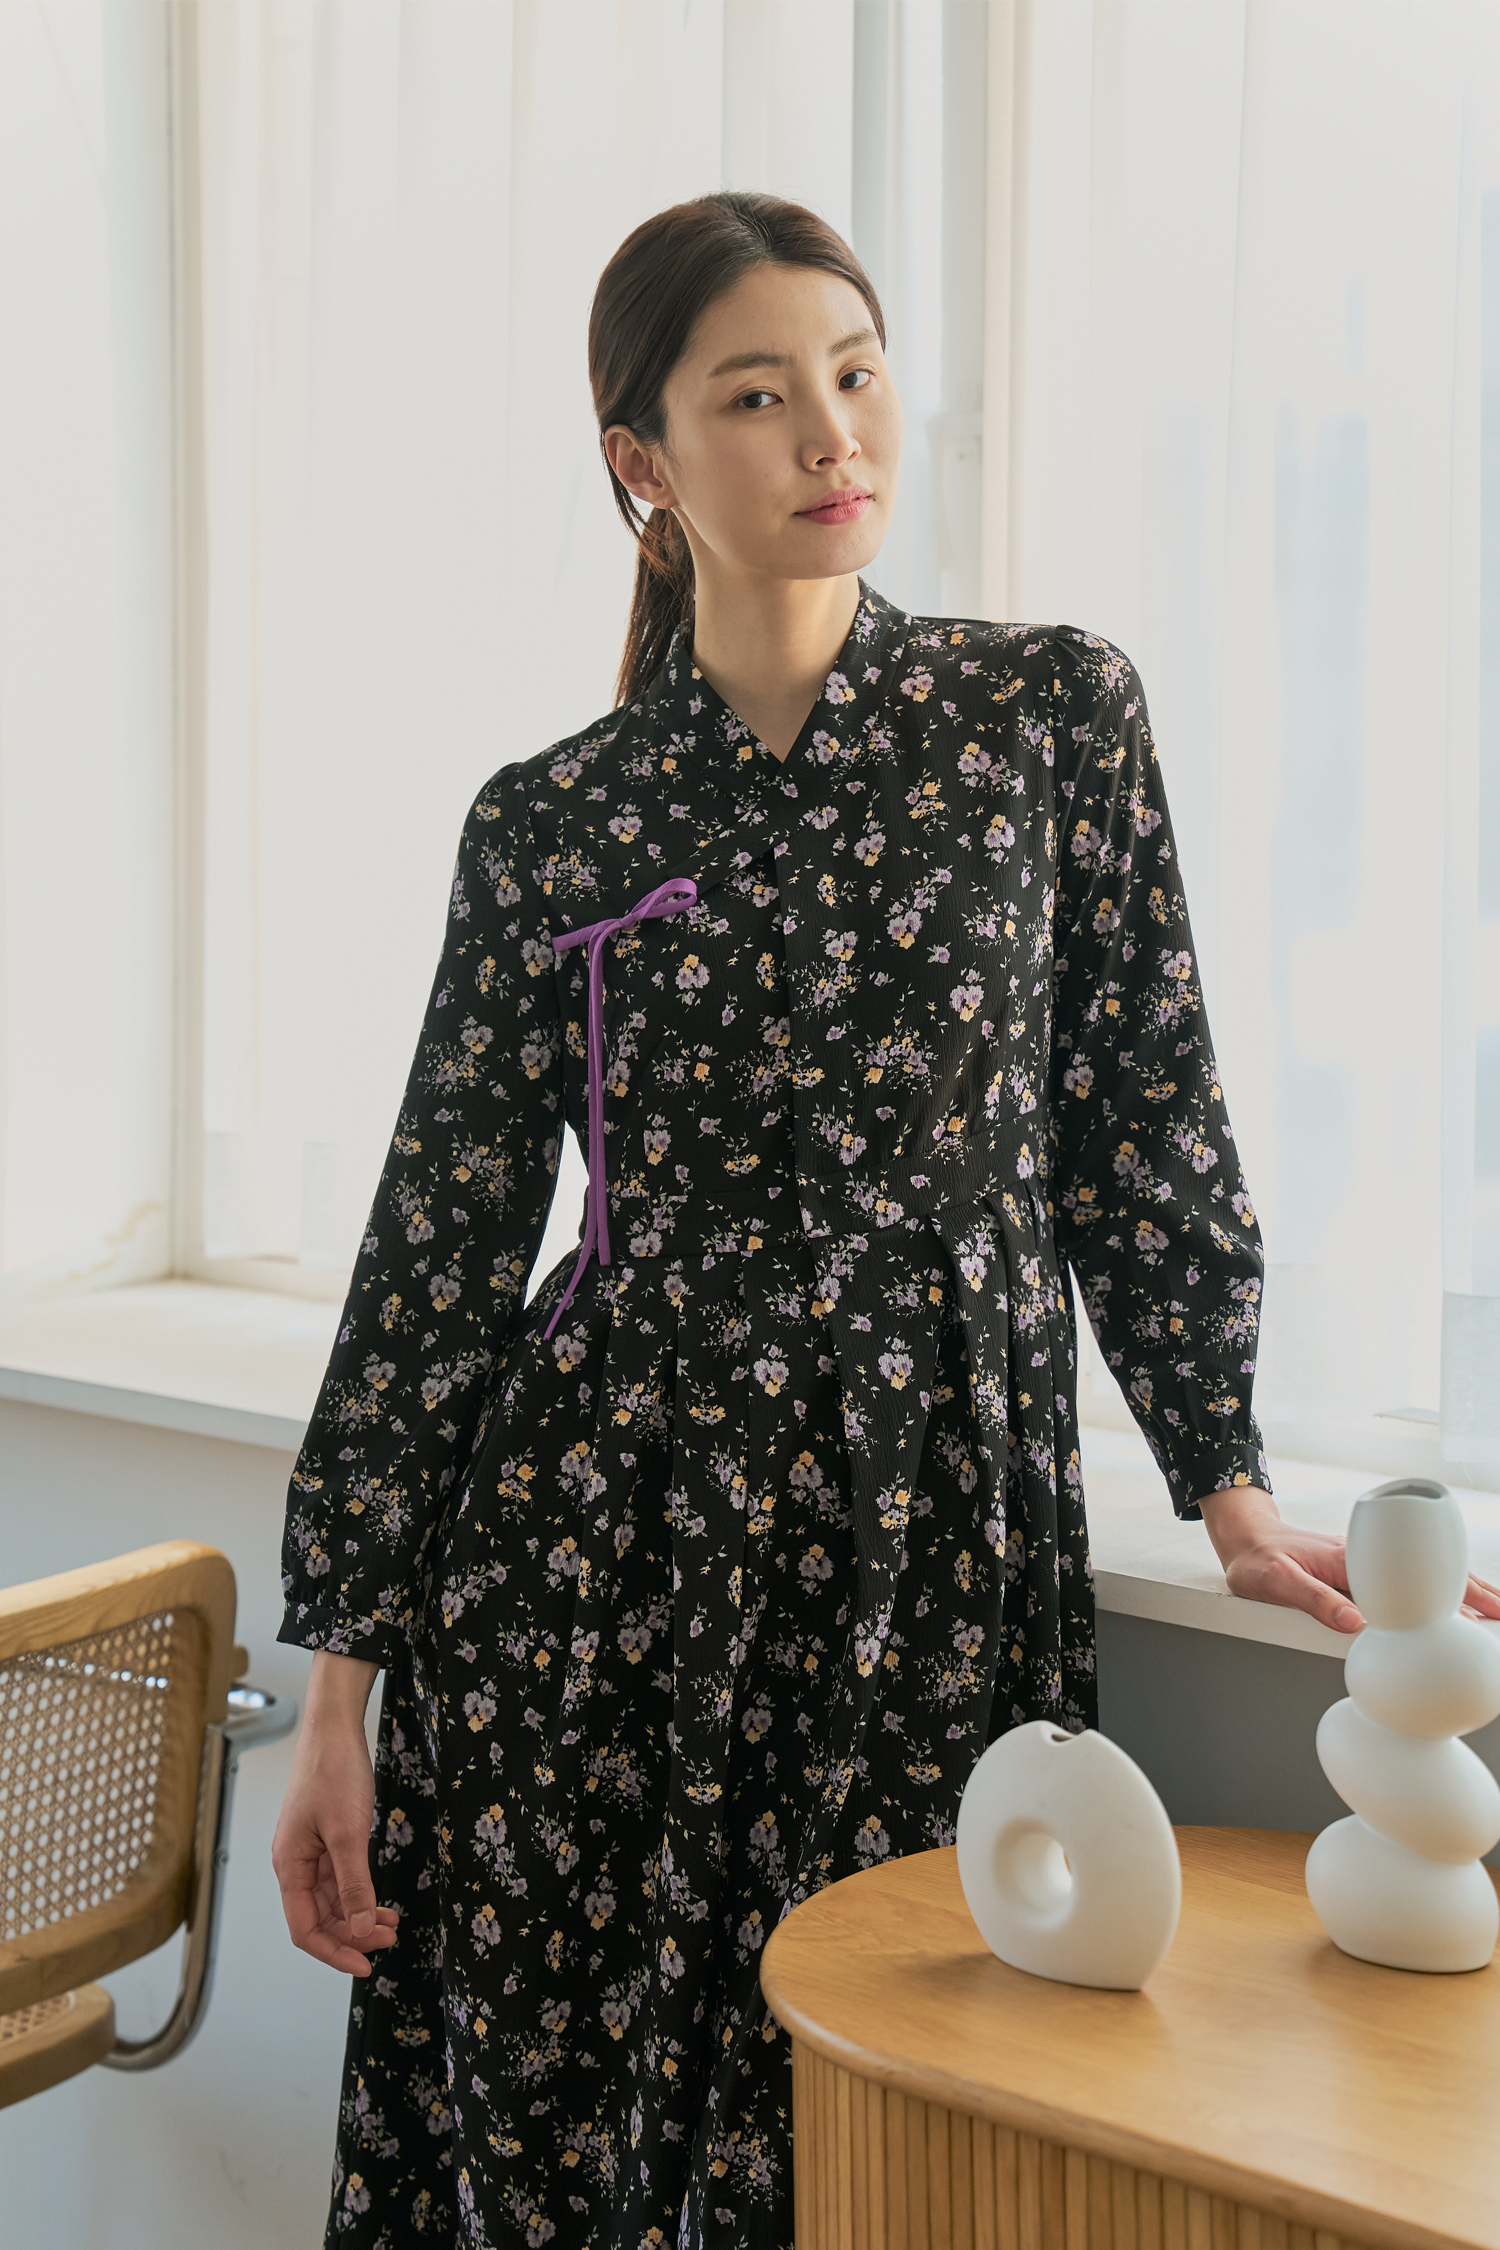 Modern Hanbok Woman Daily Comfortable Clothes Hanbok Korean Traditional  100% Cotton Washed Jacket Pants Set Pink 